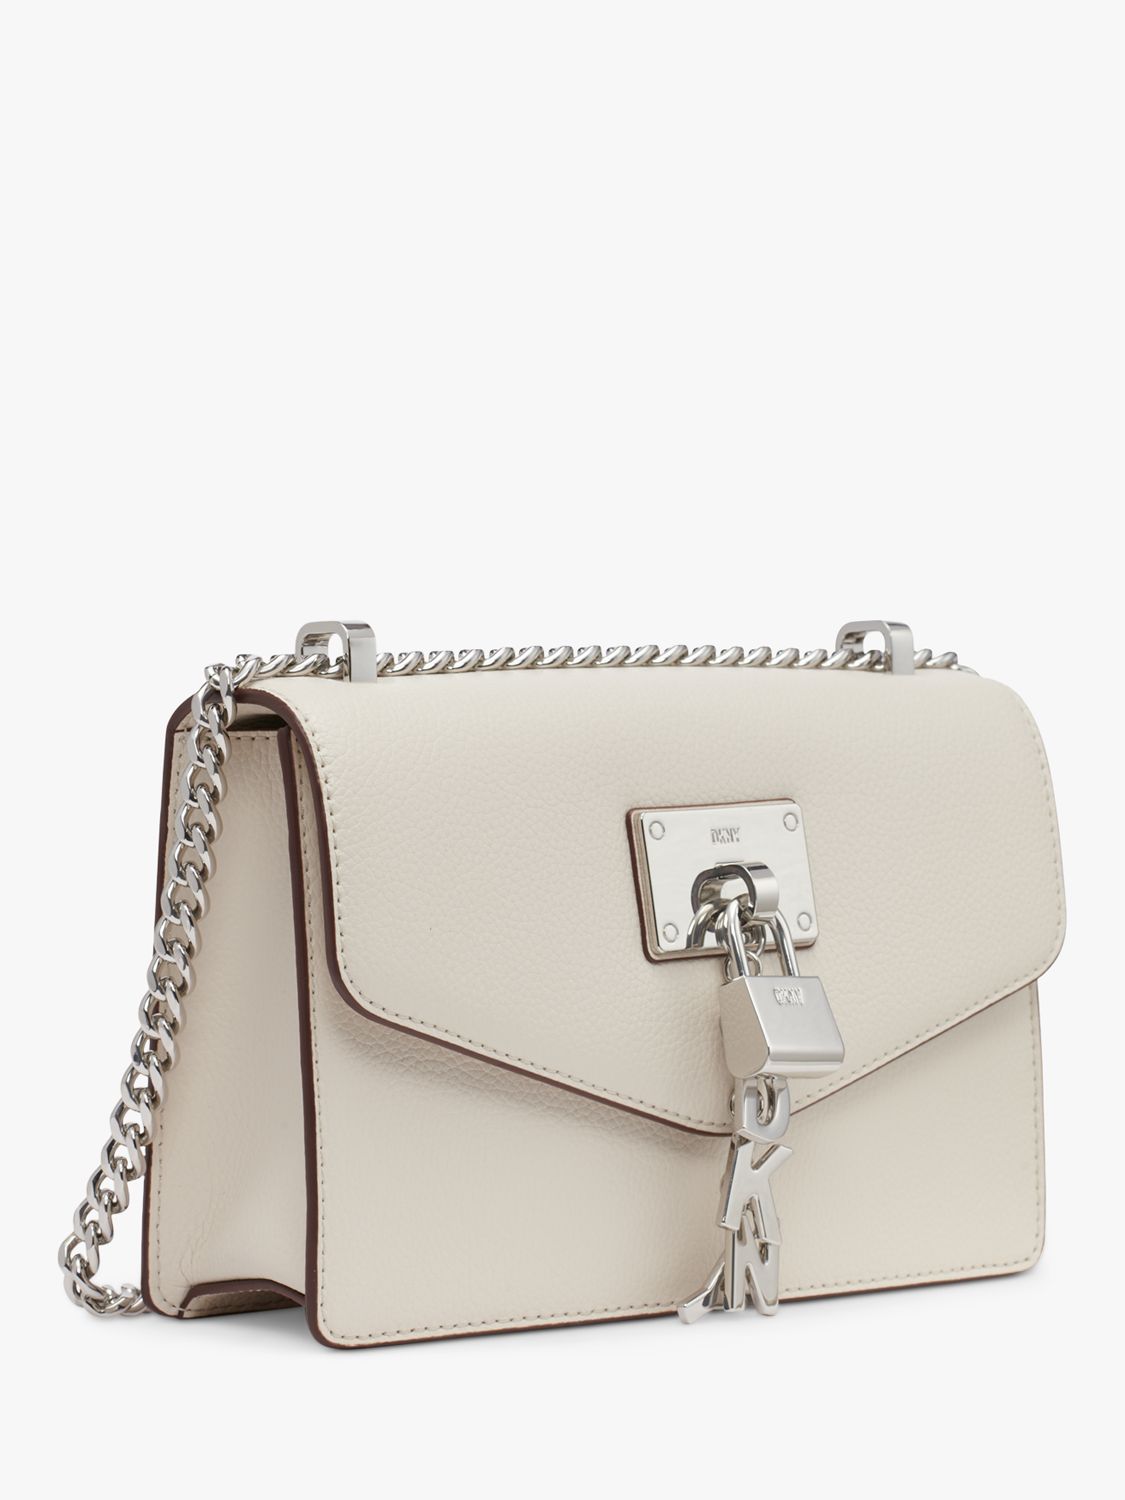 DKNY Elissa Small Pebble Leather Shoulder Bag at John Lewis & Partners